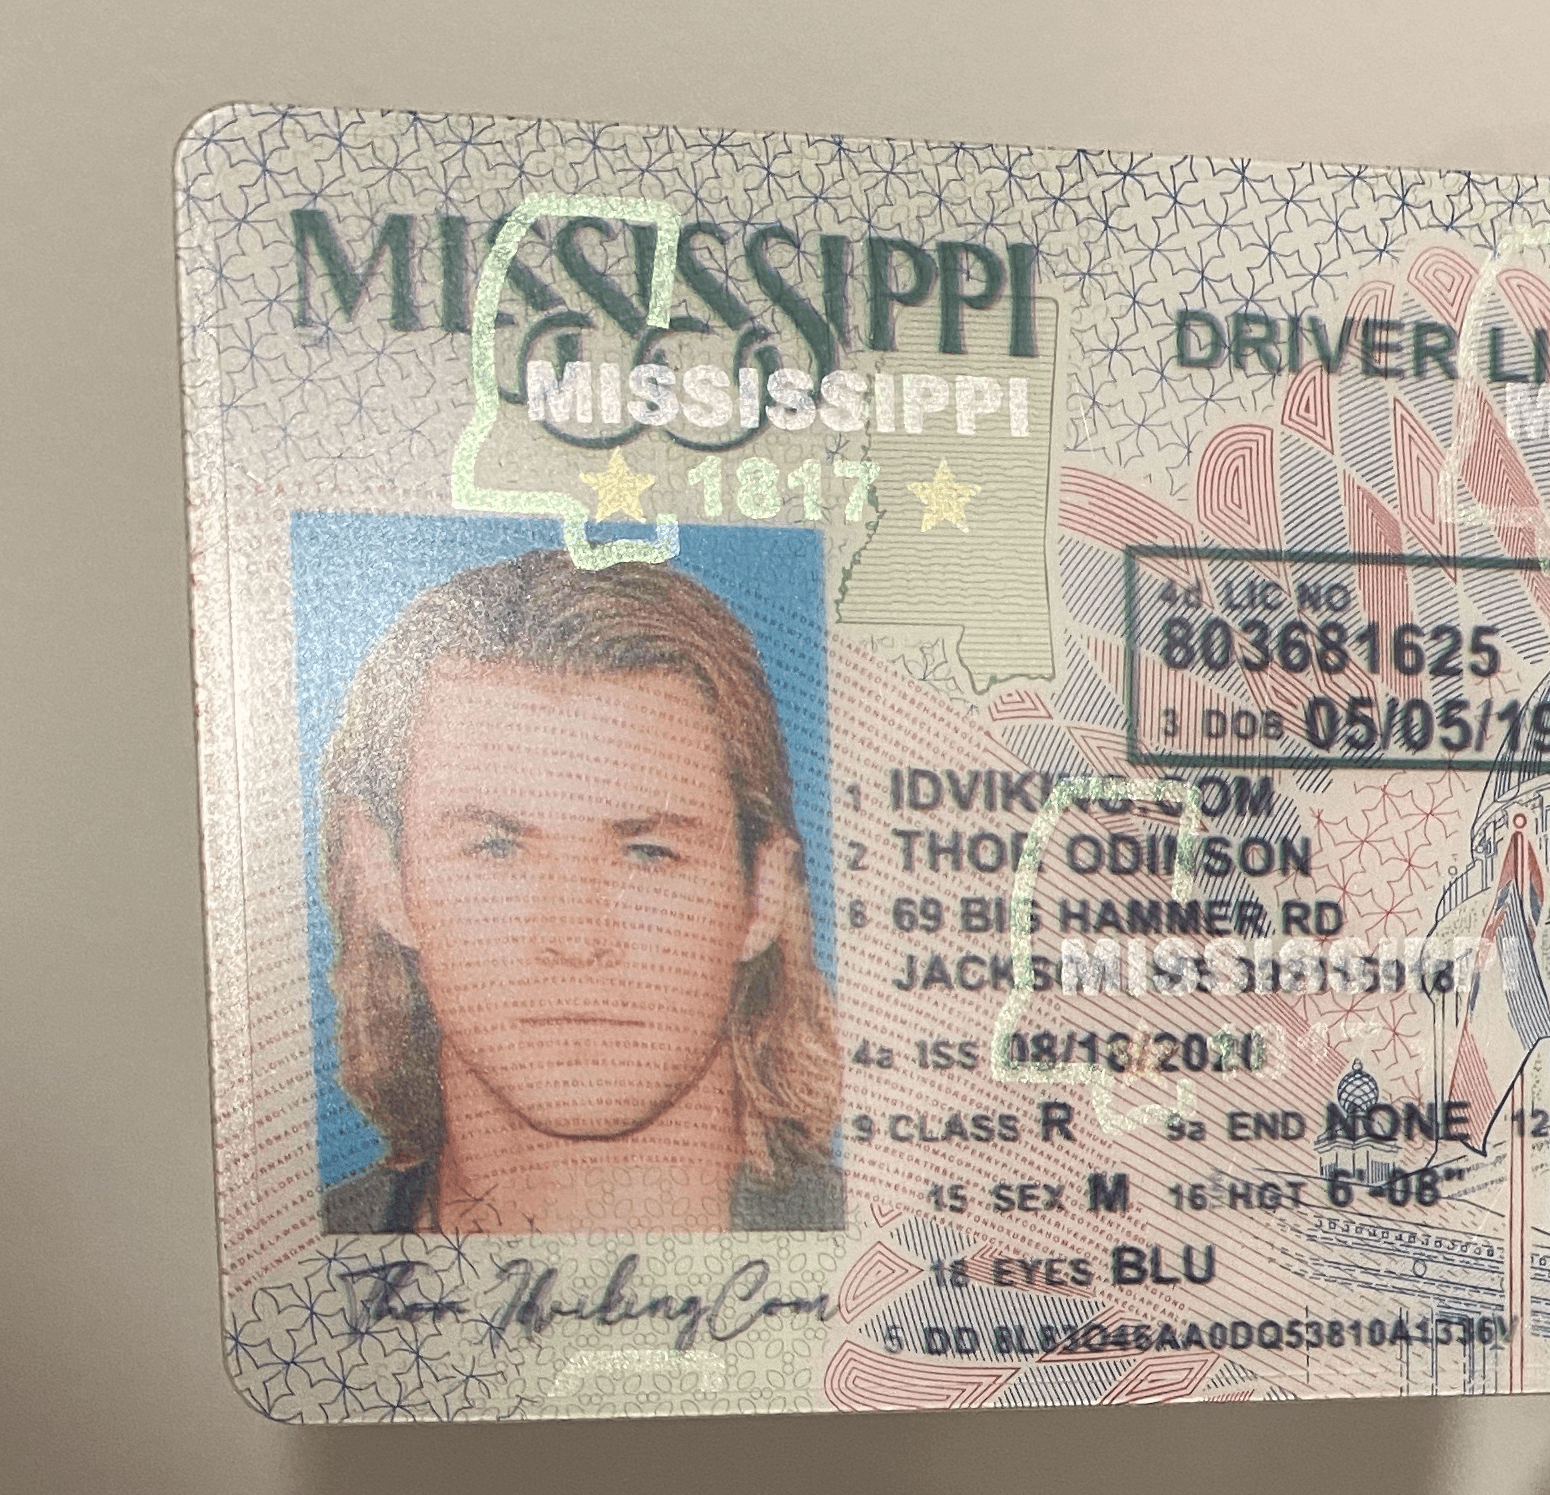 Mississippi Fake Id Online